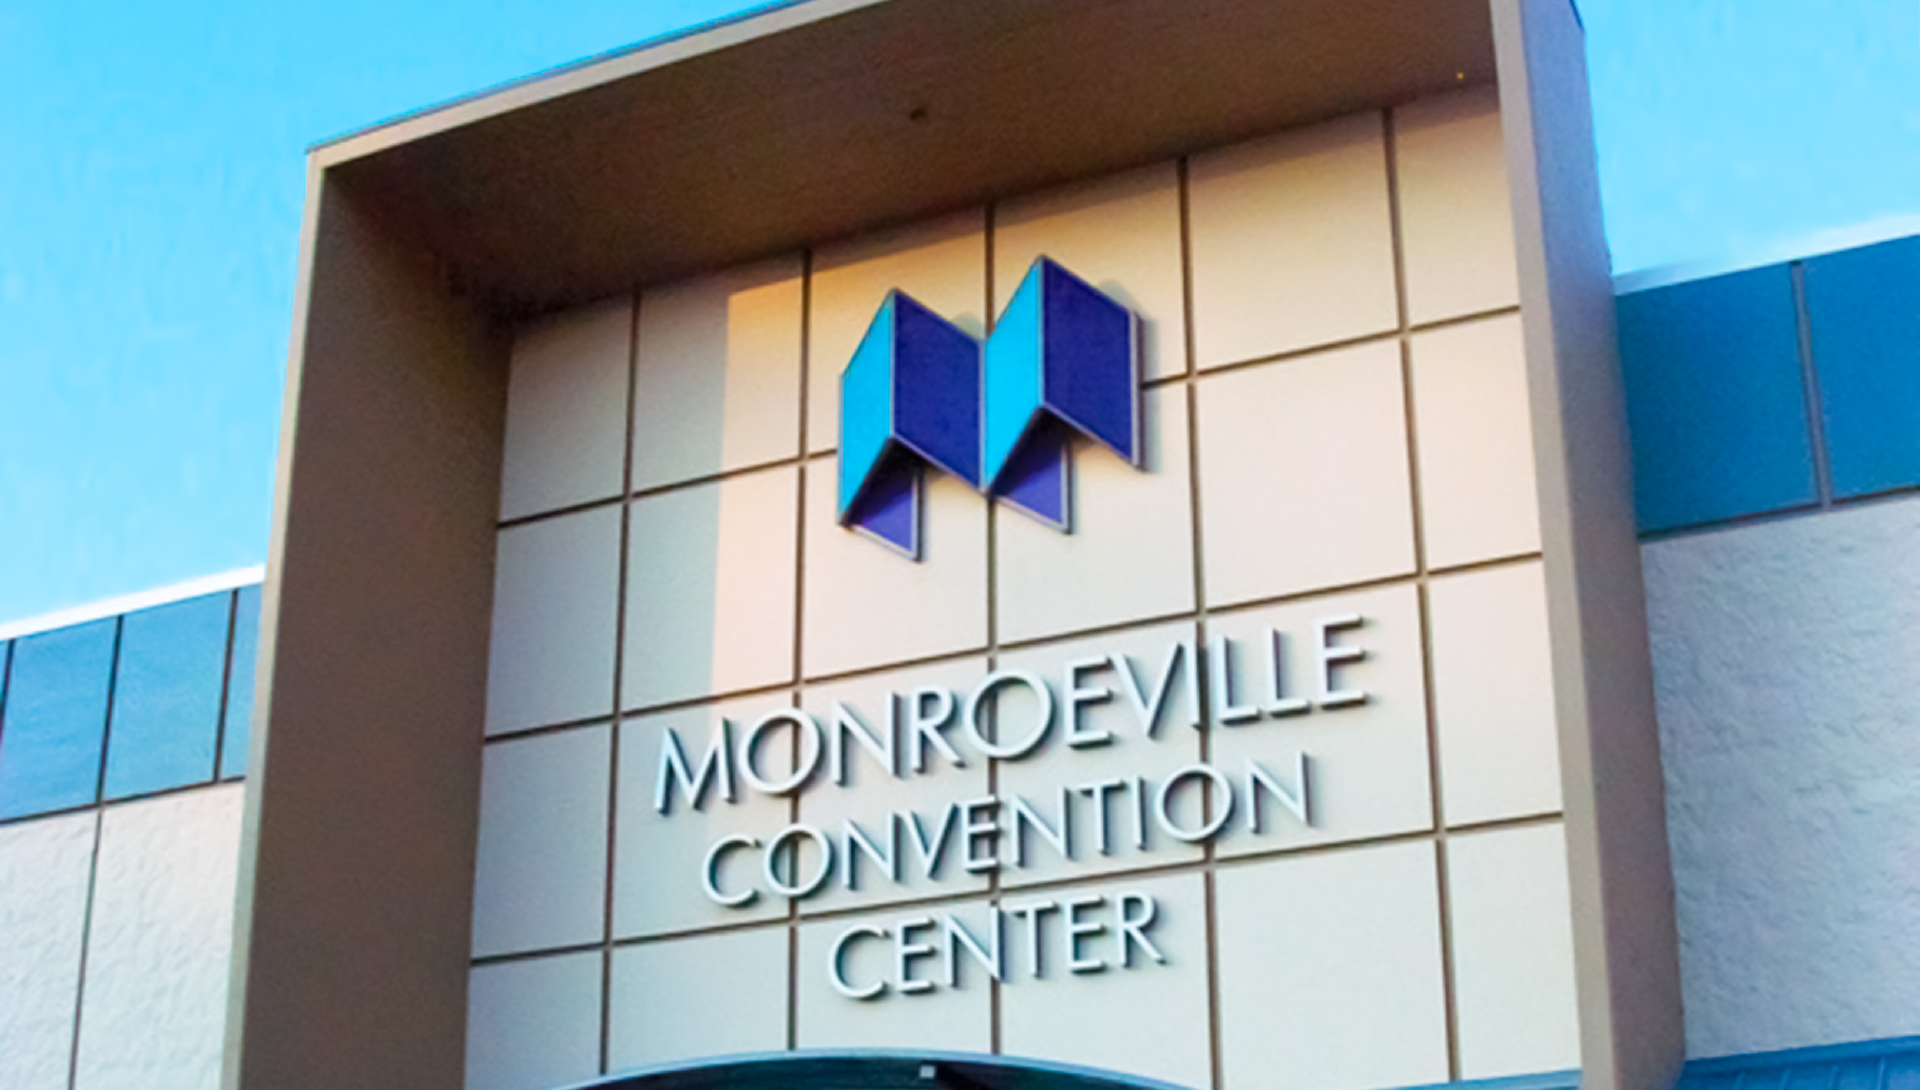 Monroeville Convention Center